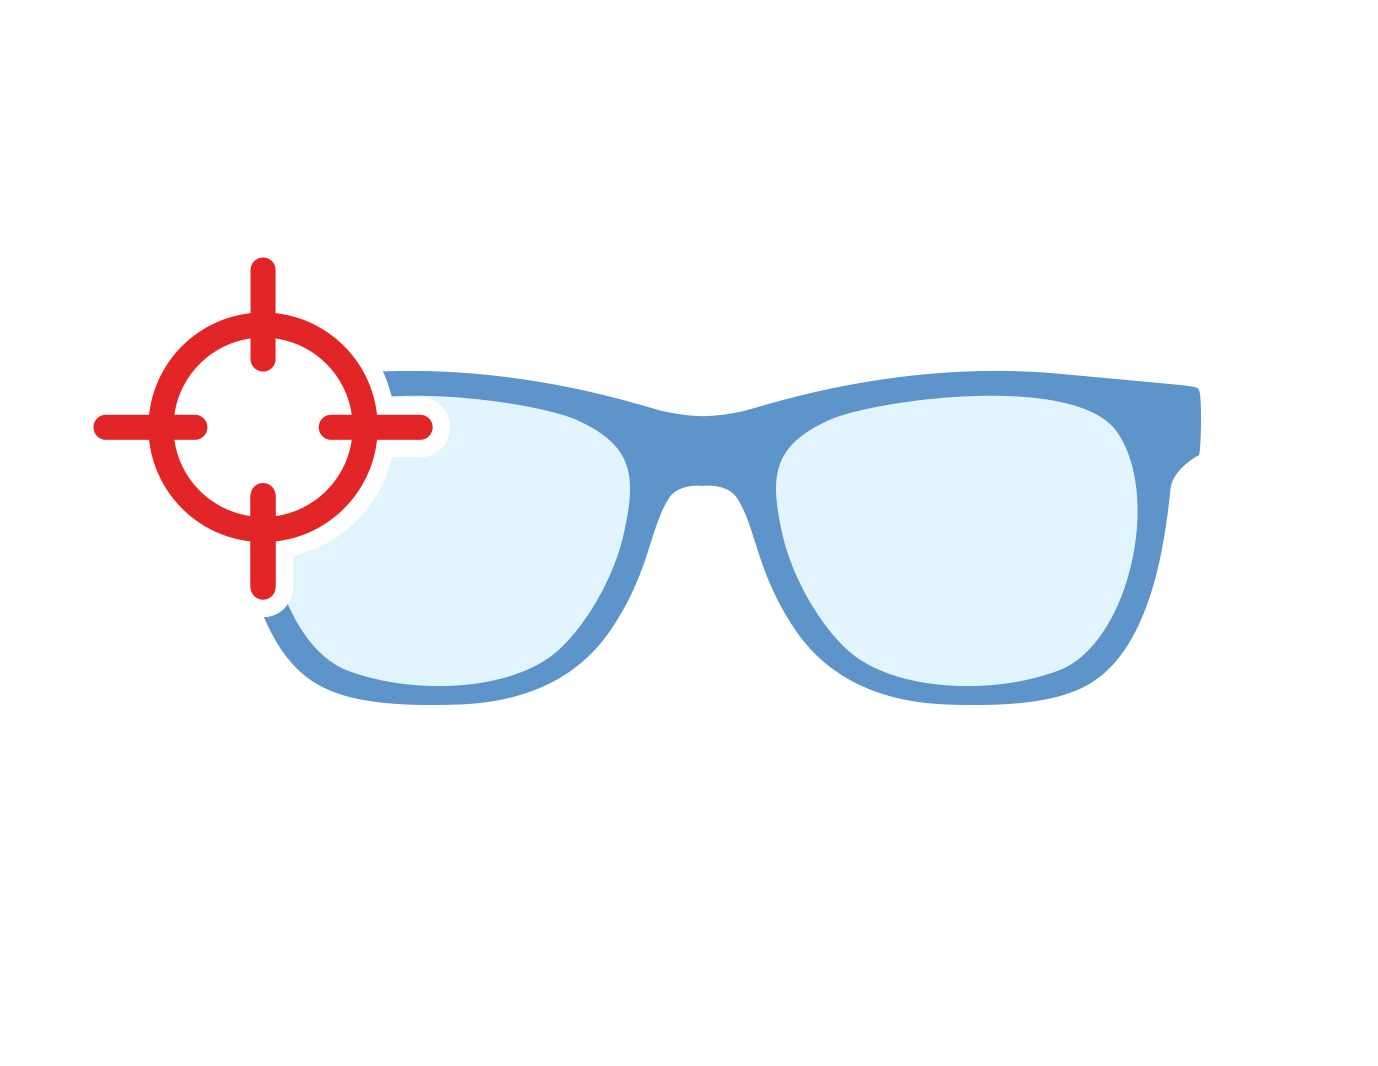 Icon of glasses with progressive lenses